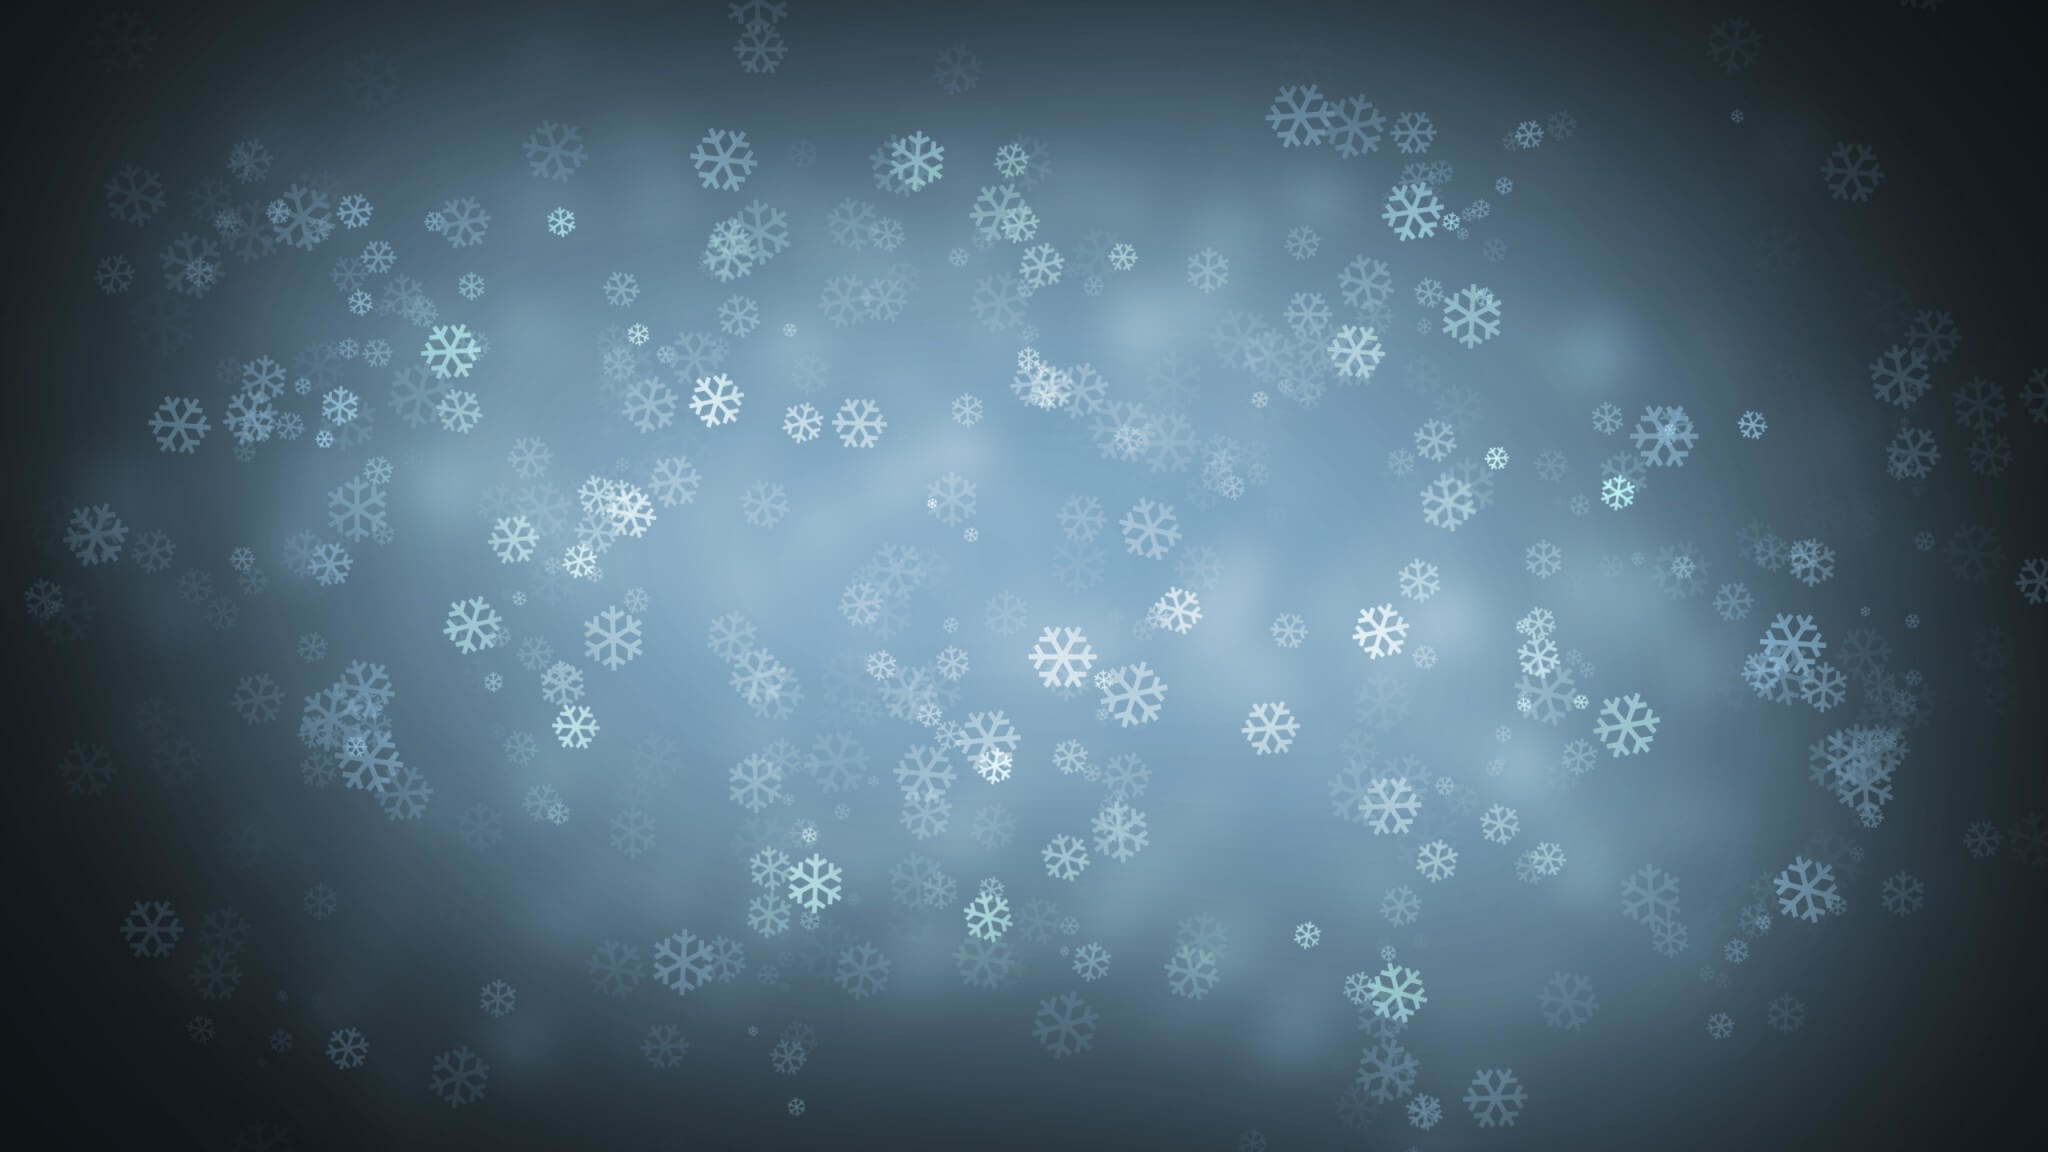 2048x1152 ... Wallpaper -Neve-Fiocco-di-neve-stile-inverno-luce-neve-fiocchi-di-neve-stile-1152x2048.jpg  ...